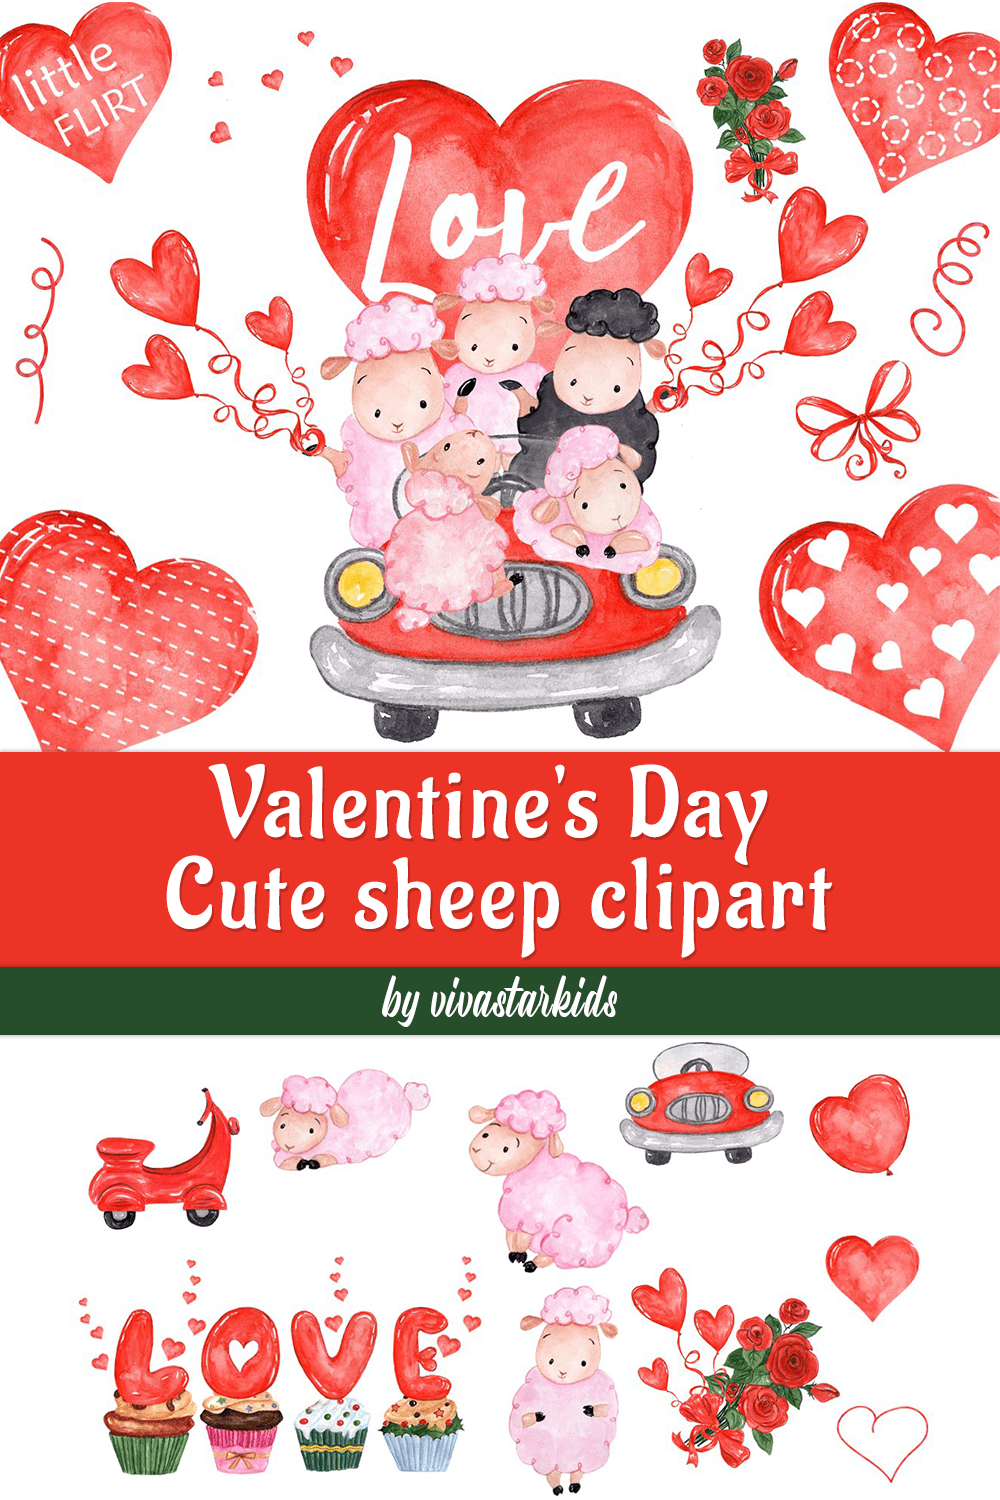 Valentine's Day Cute Sheep Clipart - Pinterest.